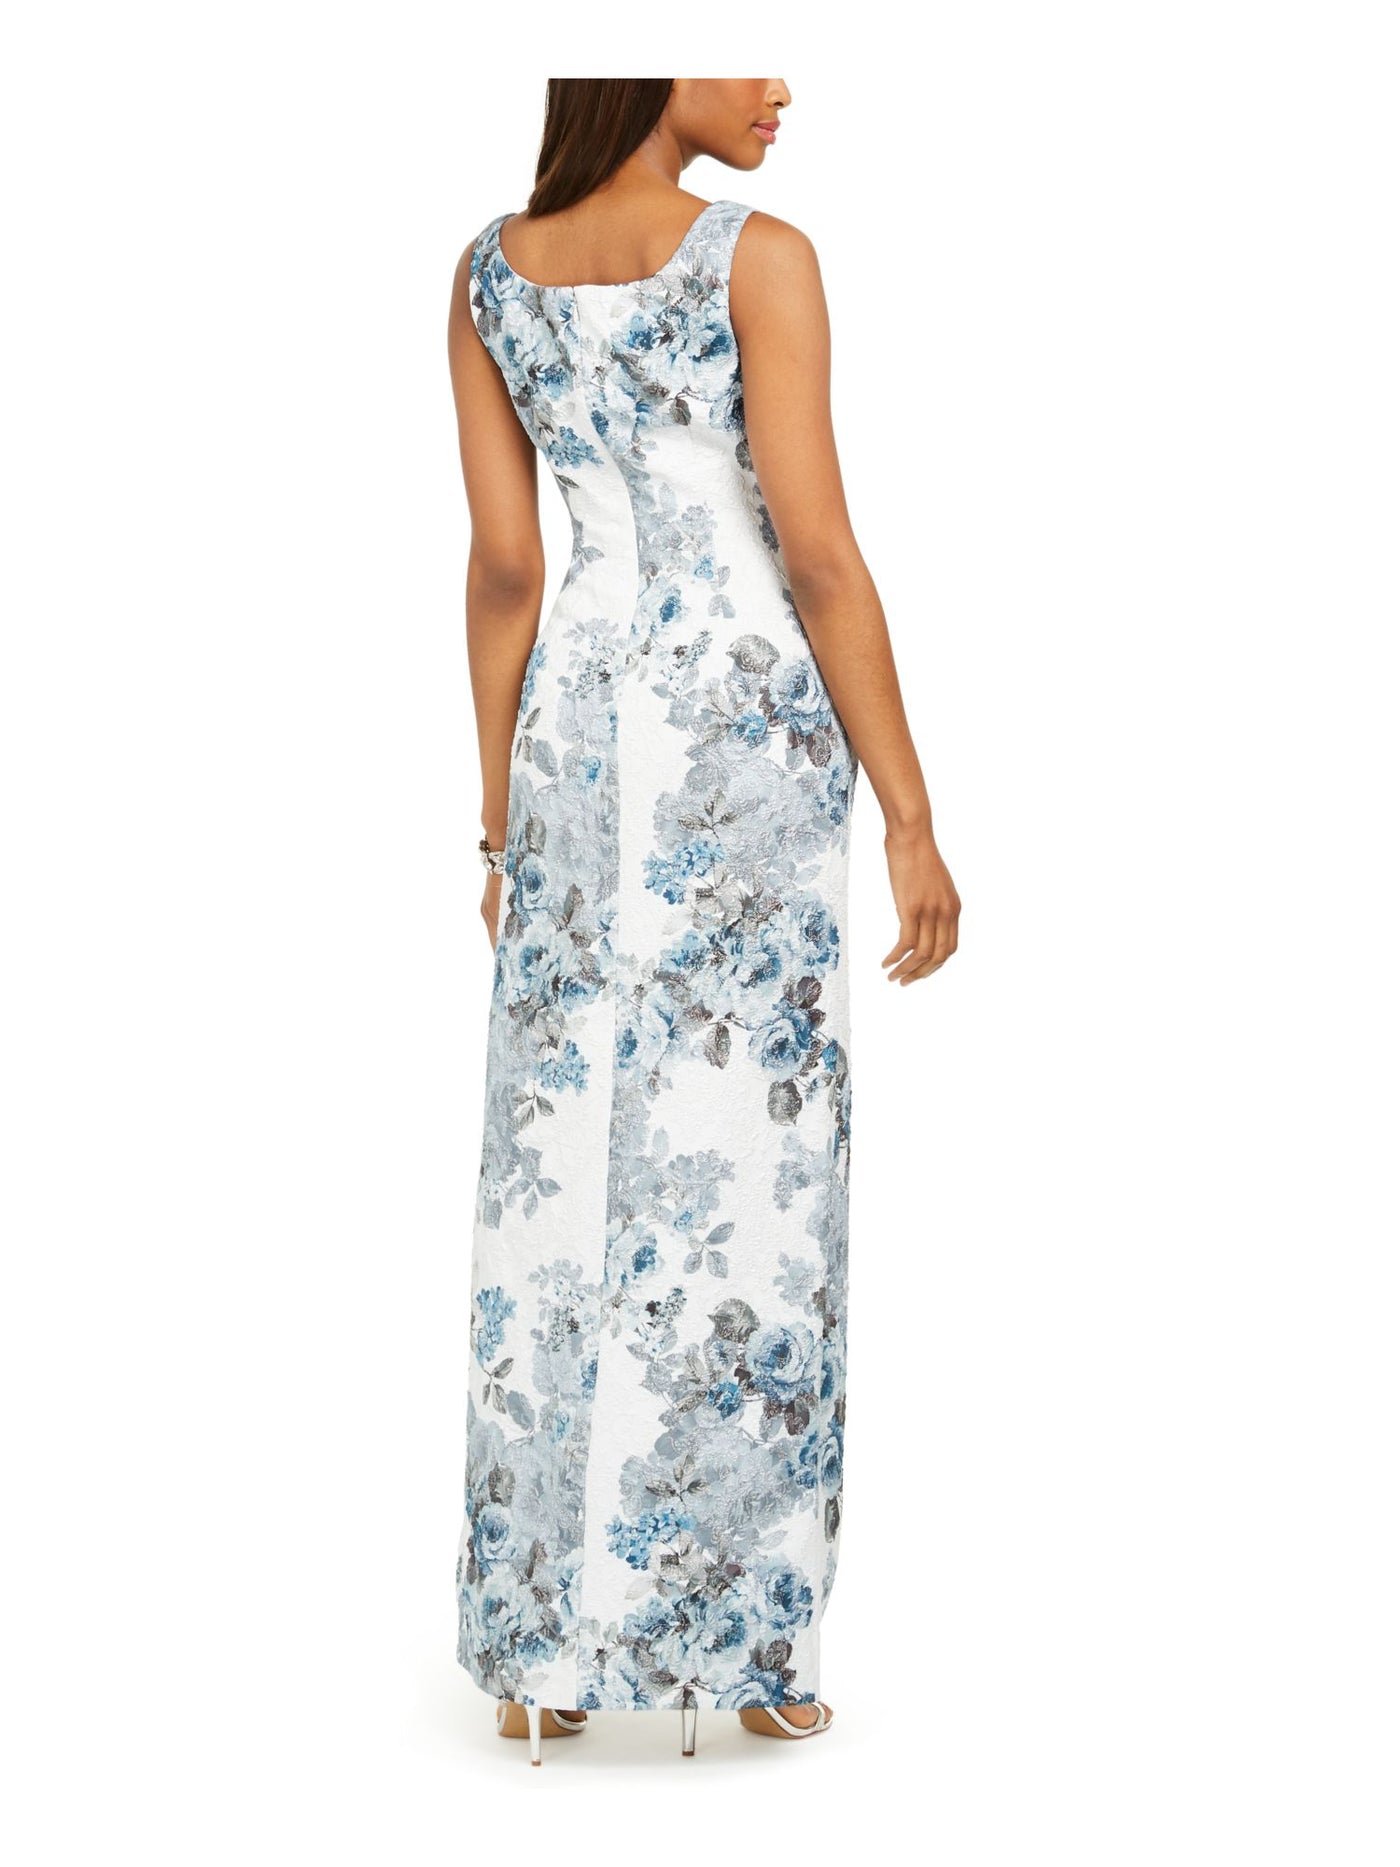 ADRIANNA PAPELL Womens Light Blue Slitted Floral Sleeveless Scoop Neck Maxi Evening Sheath Dress 16